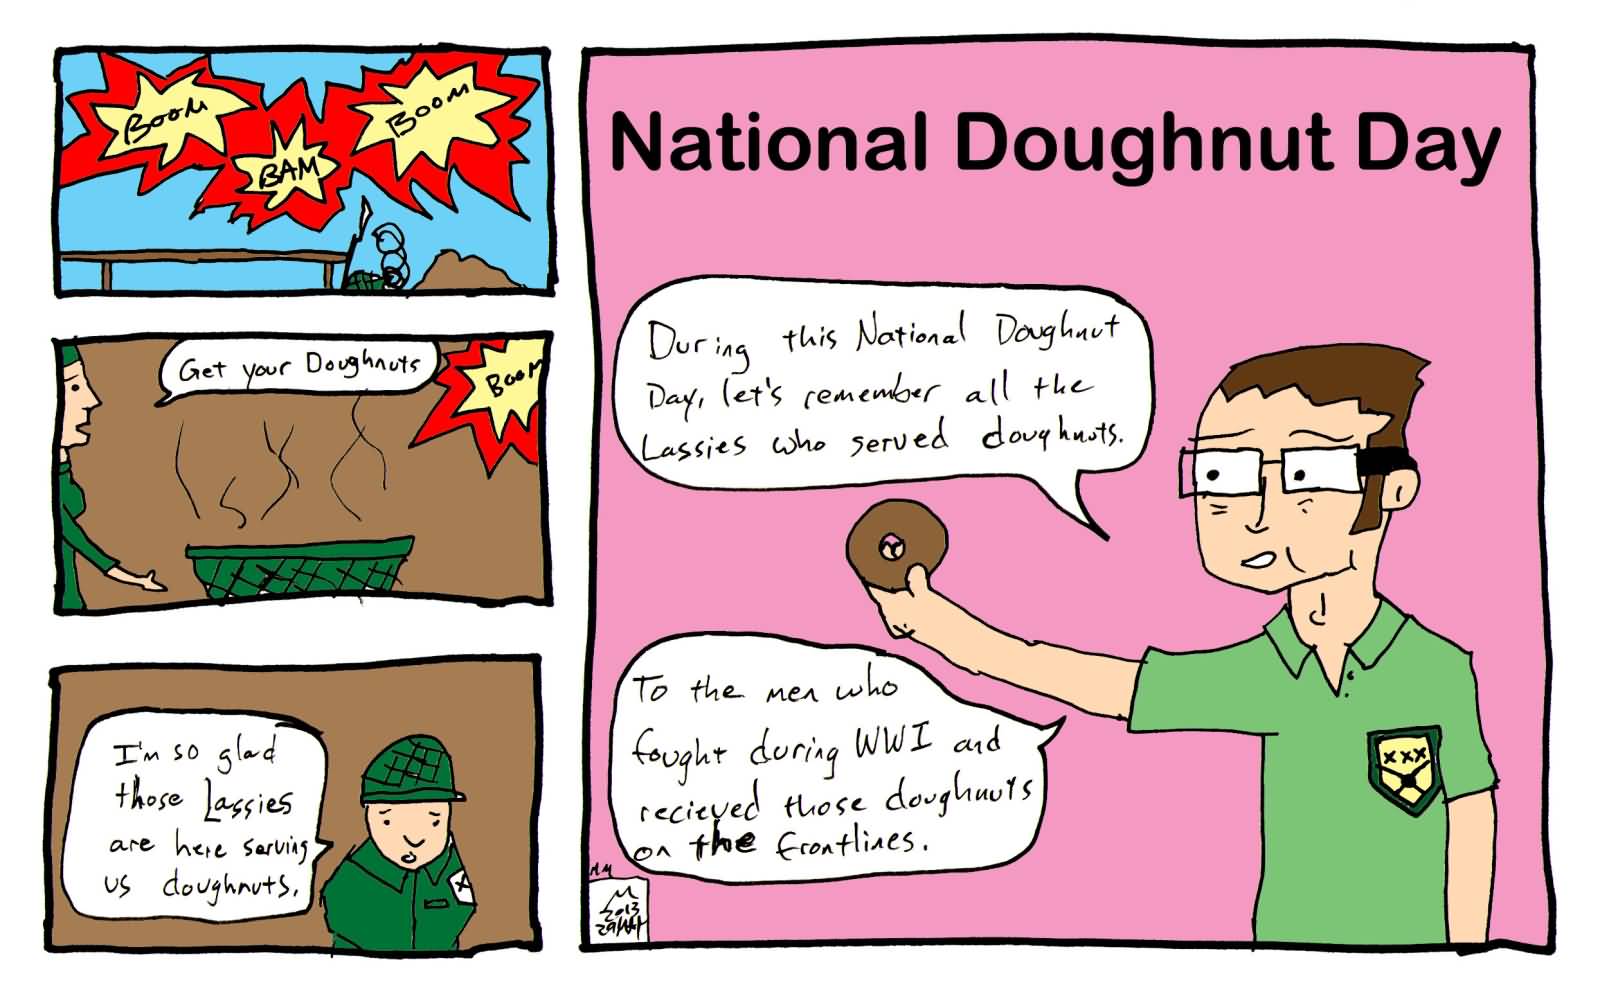 National Doughnut Day 2016 Greetings